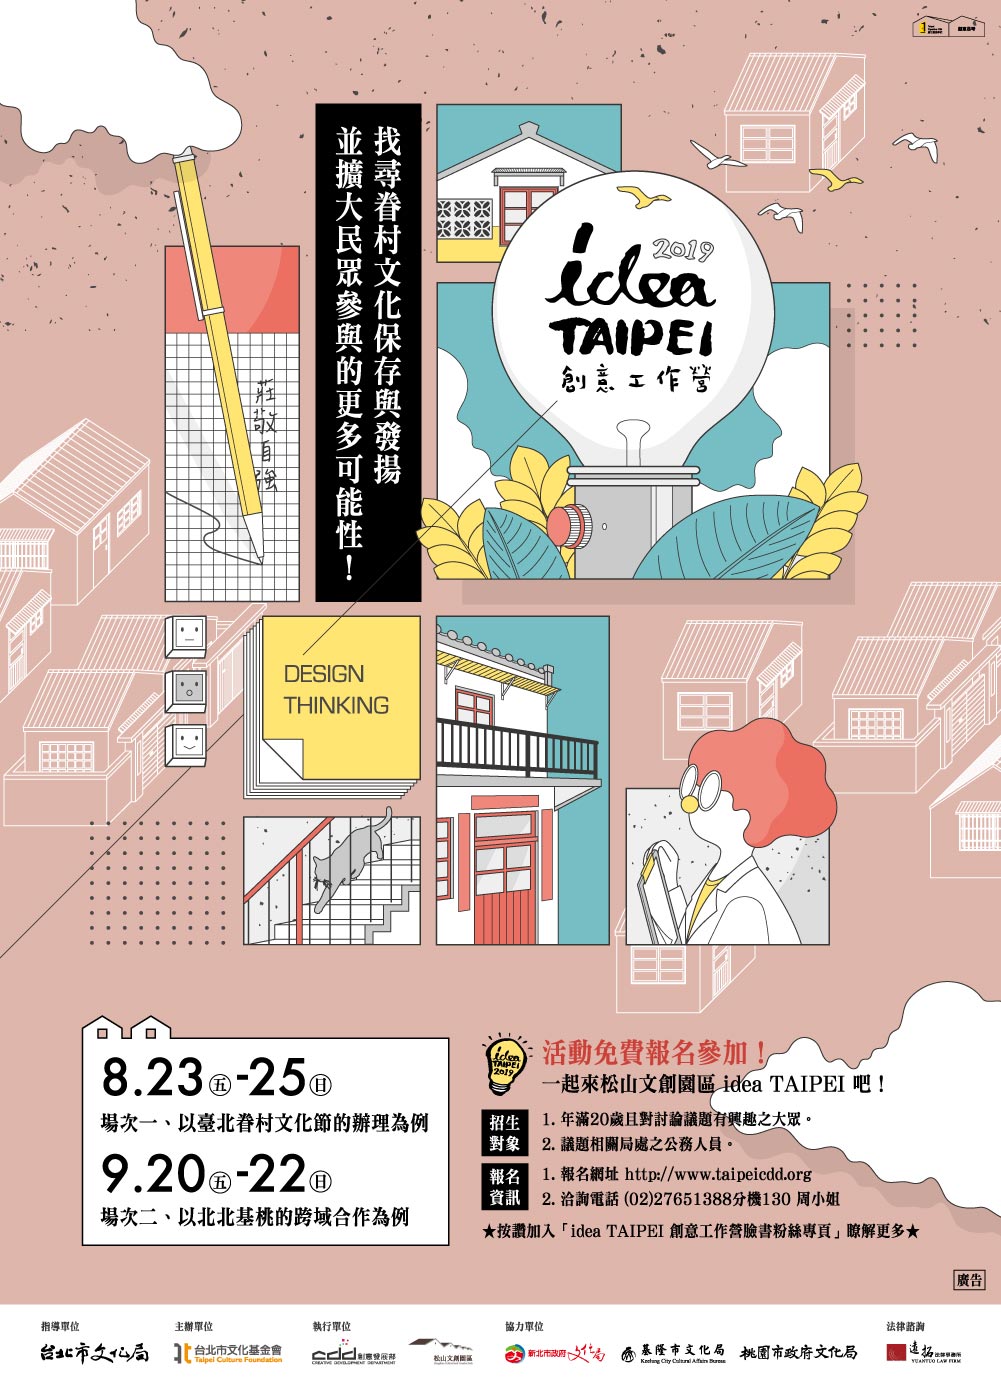 「2019 idea TAIPEI創意工作營」九月號報名時間延長囉！